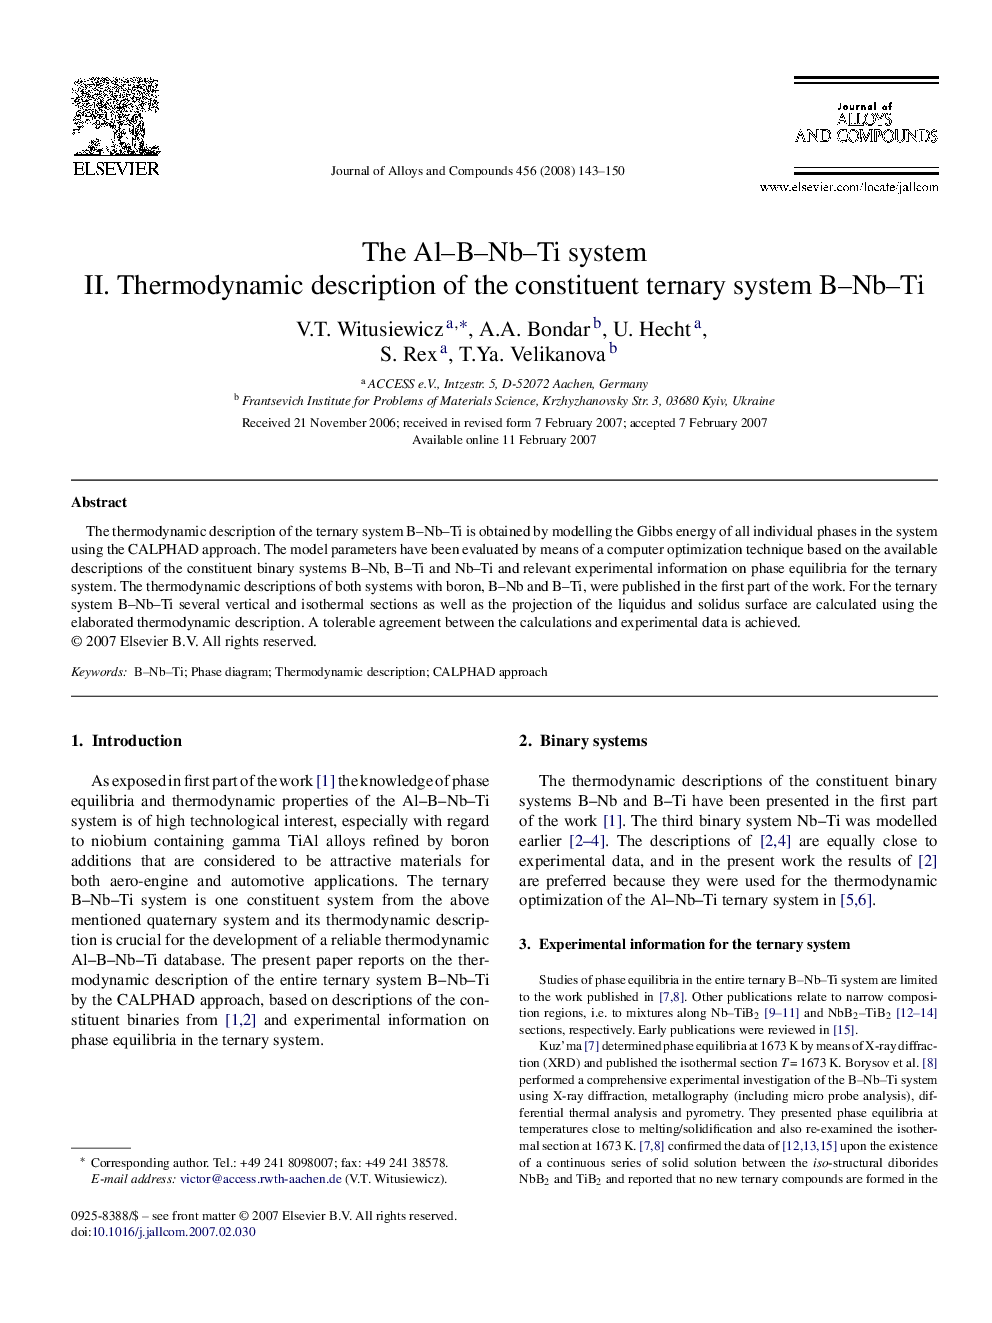 The Al–B–Nb–Ti system: II. Thermodynamic description of the constituent ternary system B–Nb–Ti